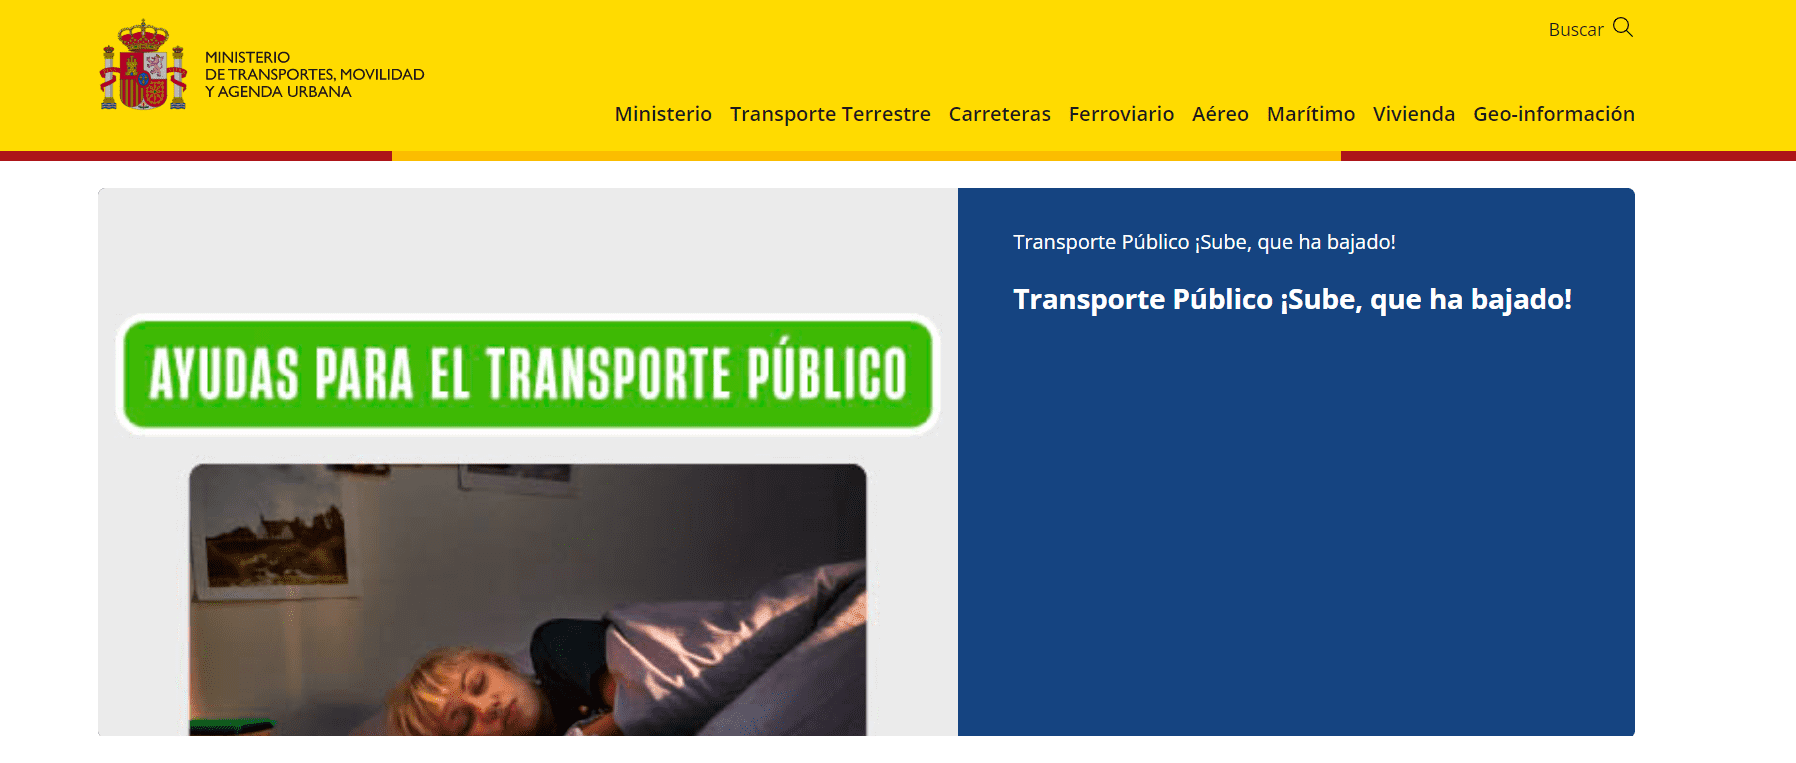 Descuento-interrail-trenes-y-buses/Pic-1